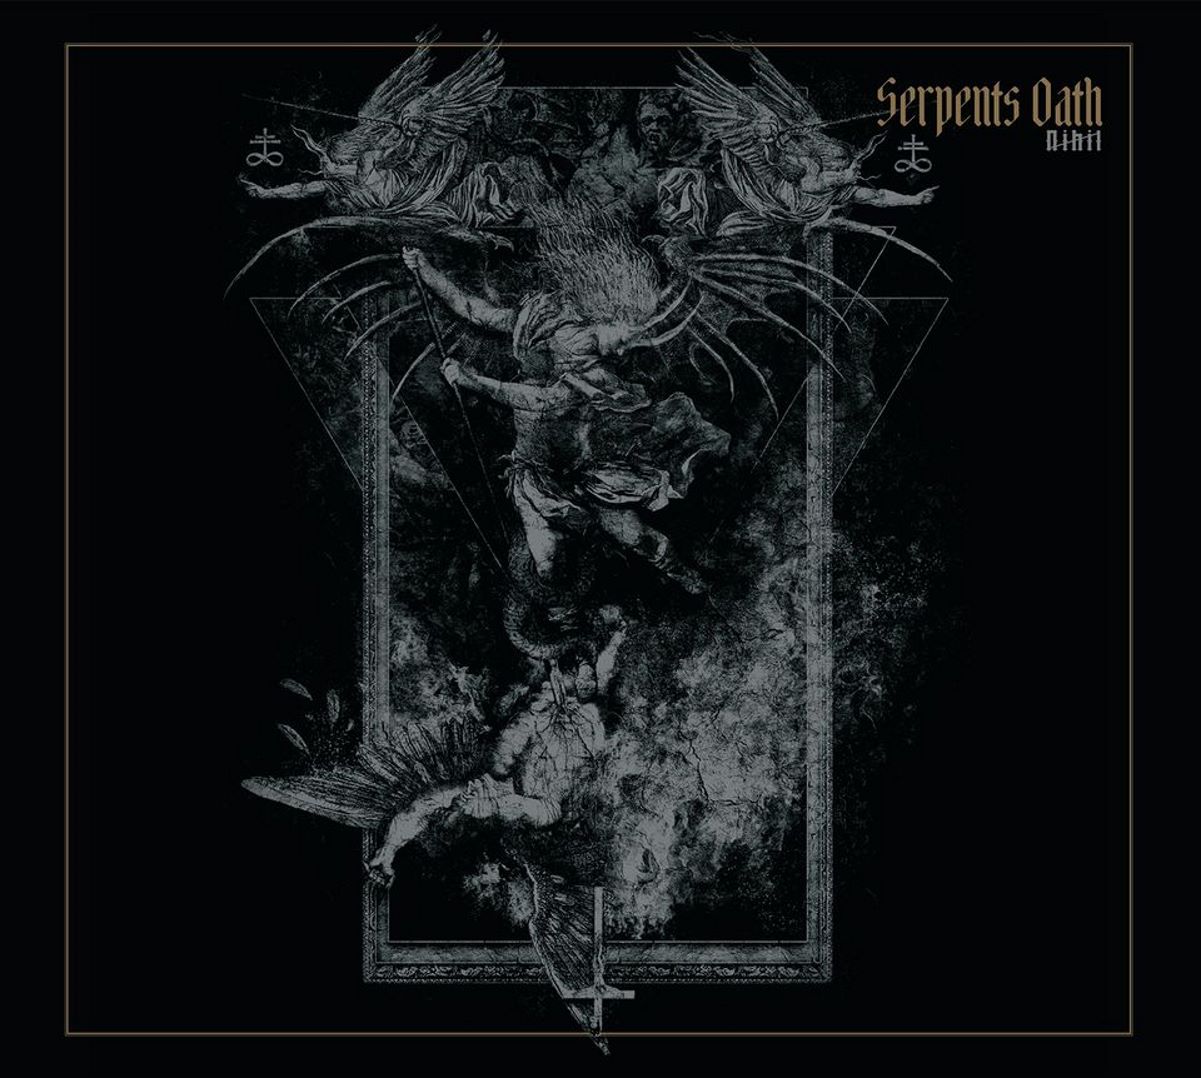 serpents oath - Nihil - album cover